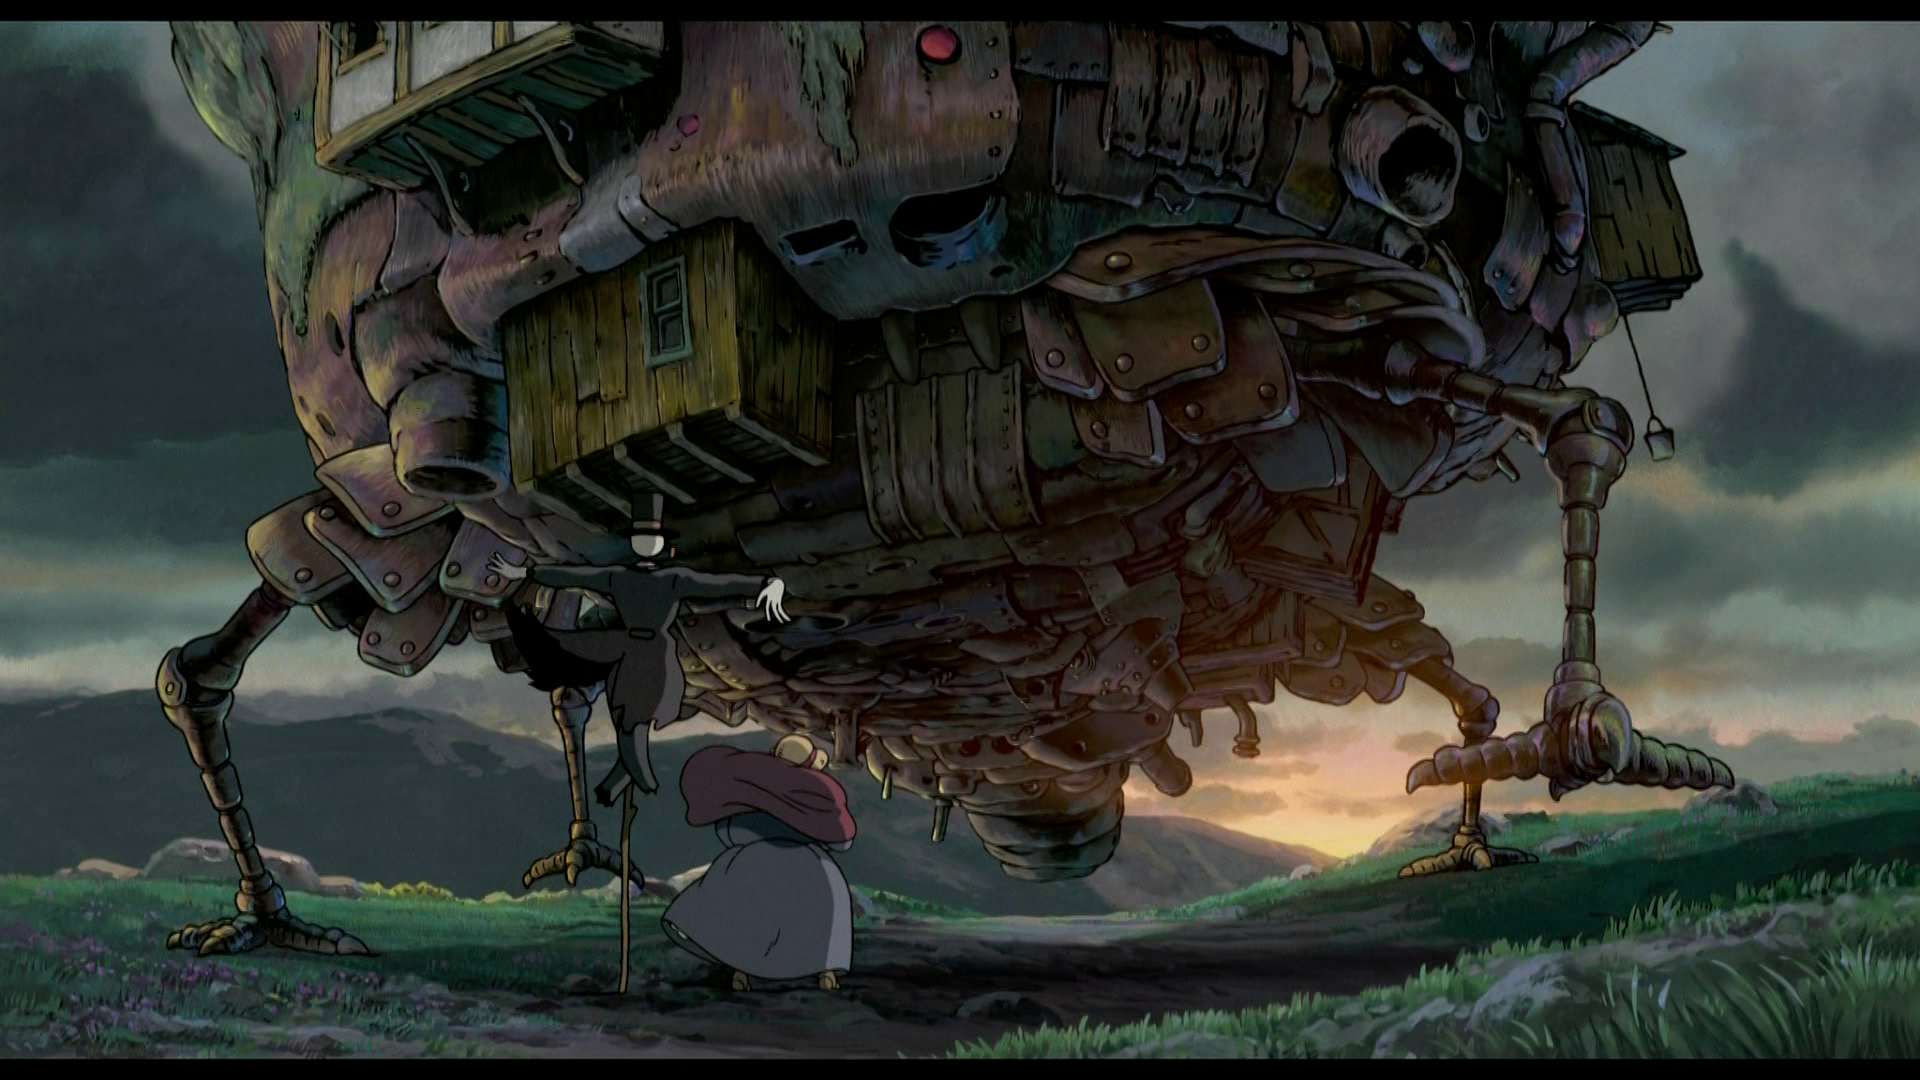 Hayao Miyazaki Howl's Moving Castle wallpaper - 896140